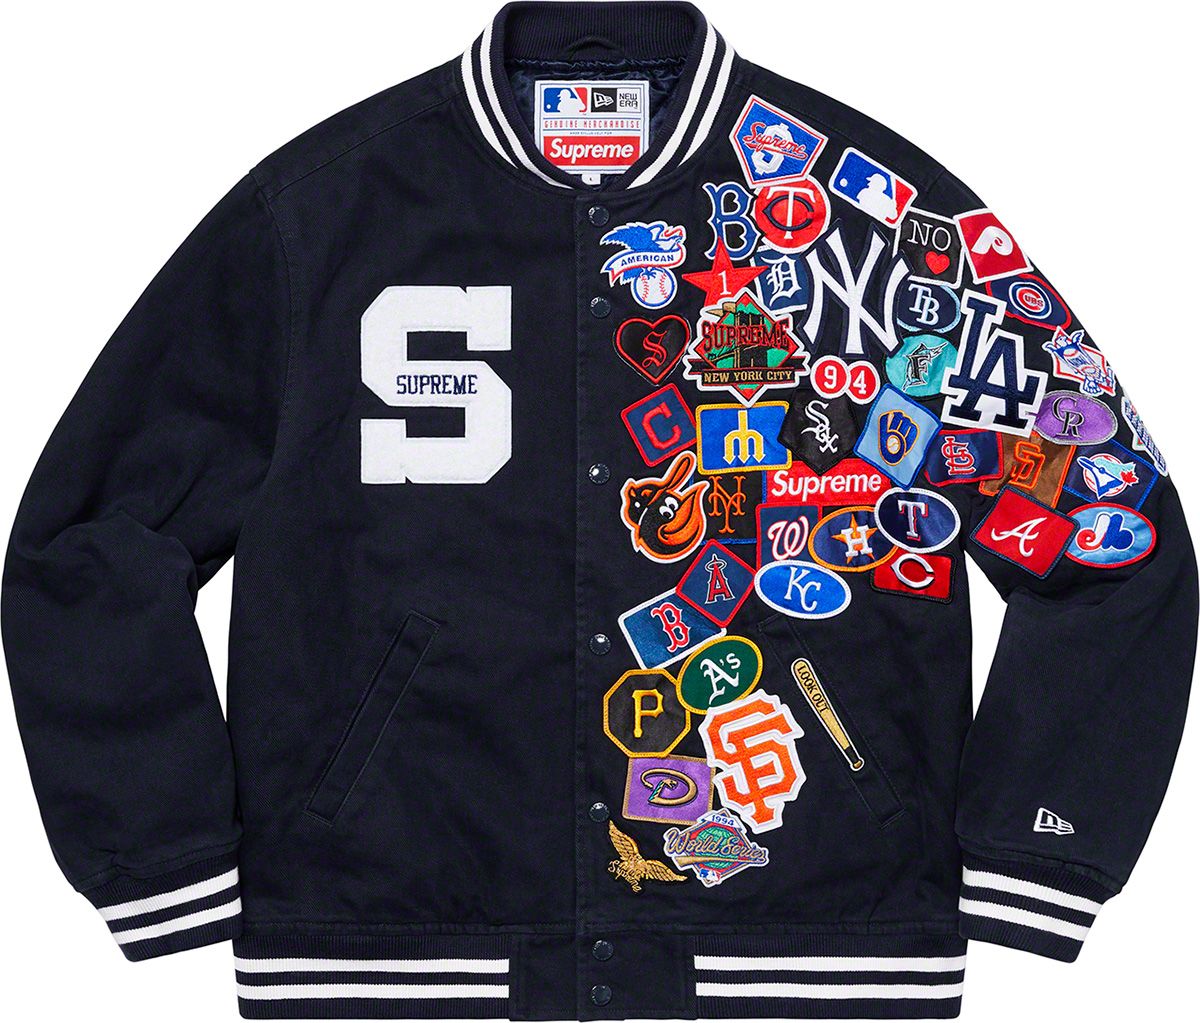 Supreme®/New Era®/ MLB Varsity Jacket - Spring/Summer 2020 Preview